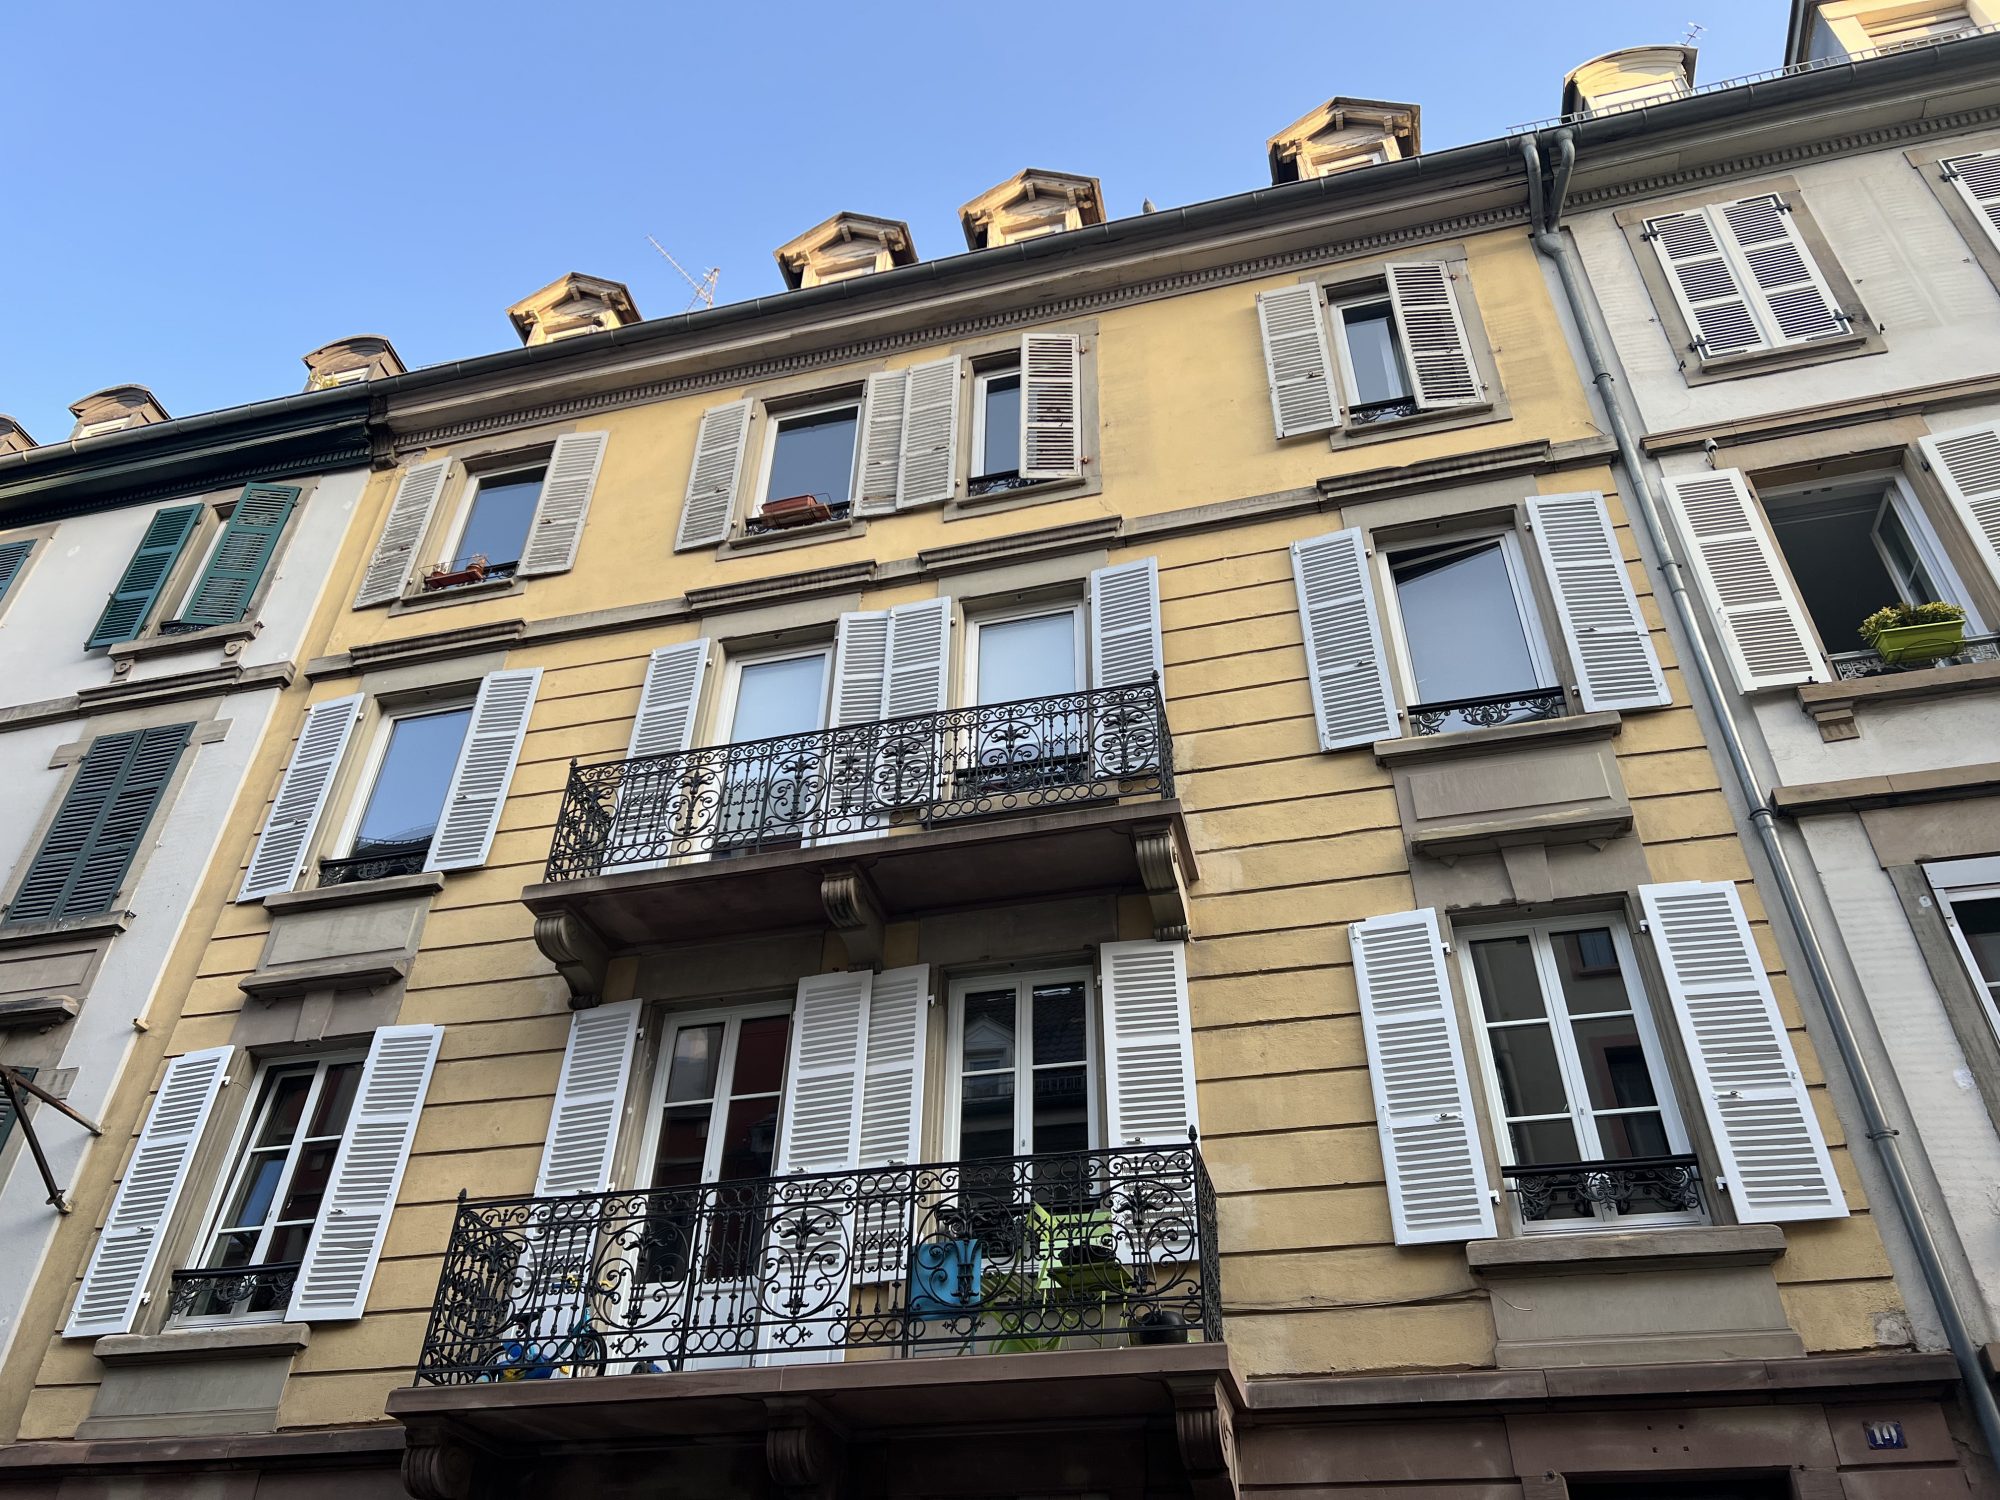 6 pièces quartier Gare - achat appartement Strasbourg - Bintz Immobilier - 1